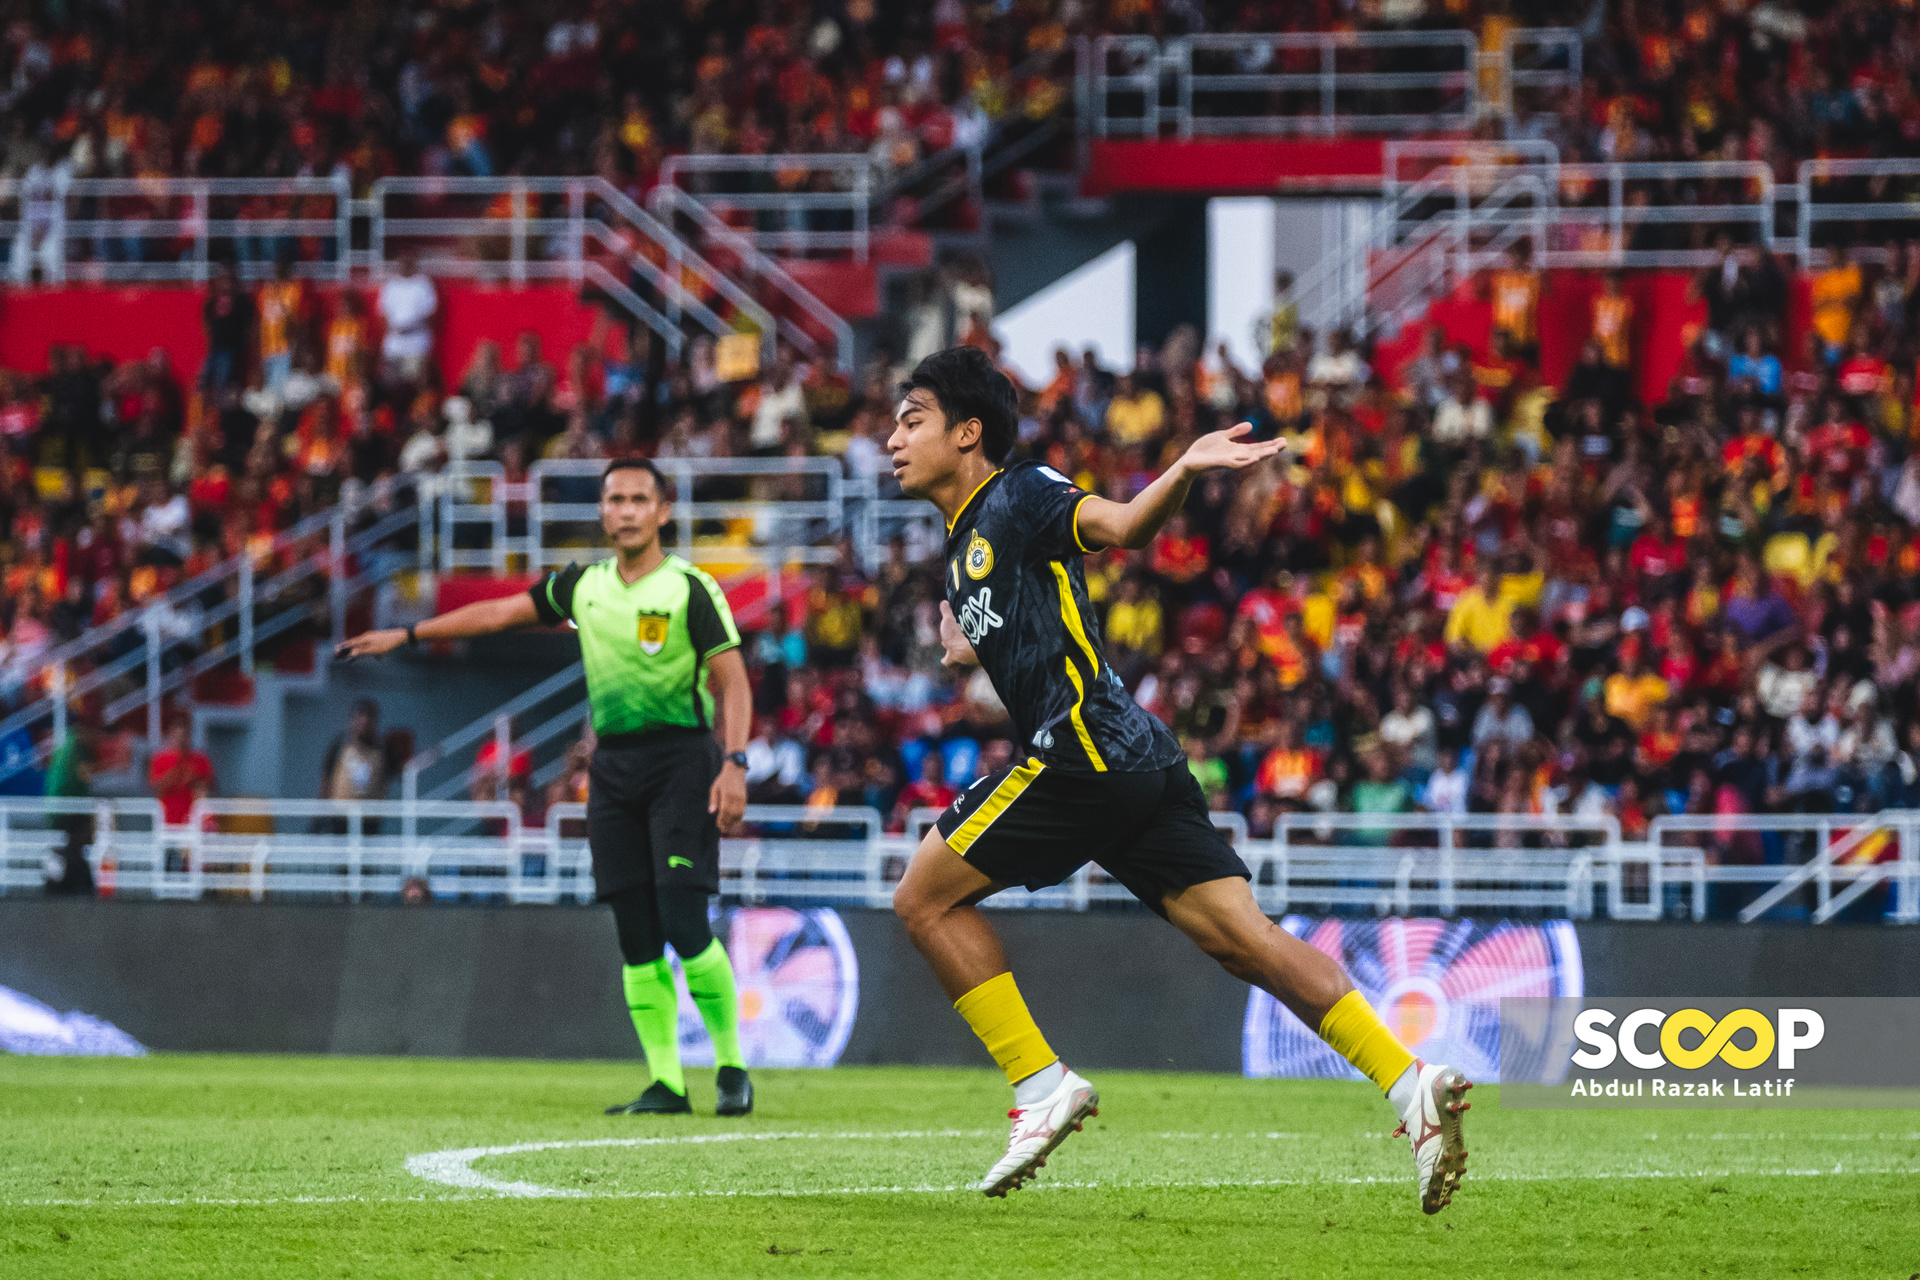 Perak FC verbally warns Azfar over obscene gestures during match against Selangor